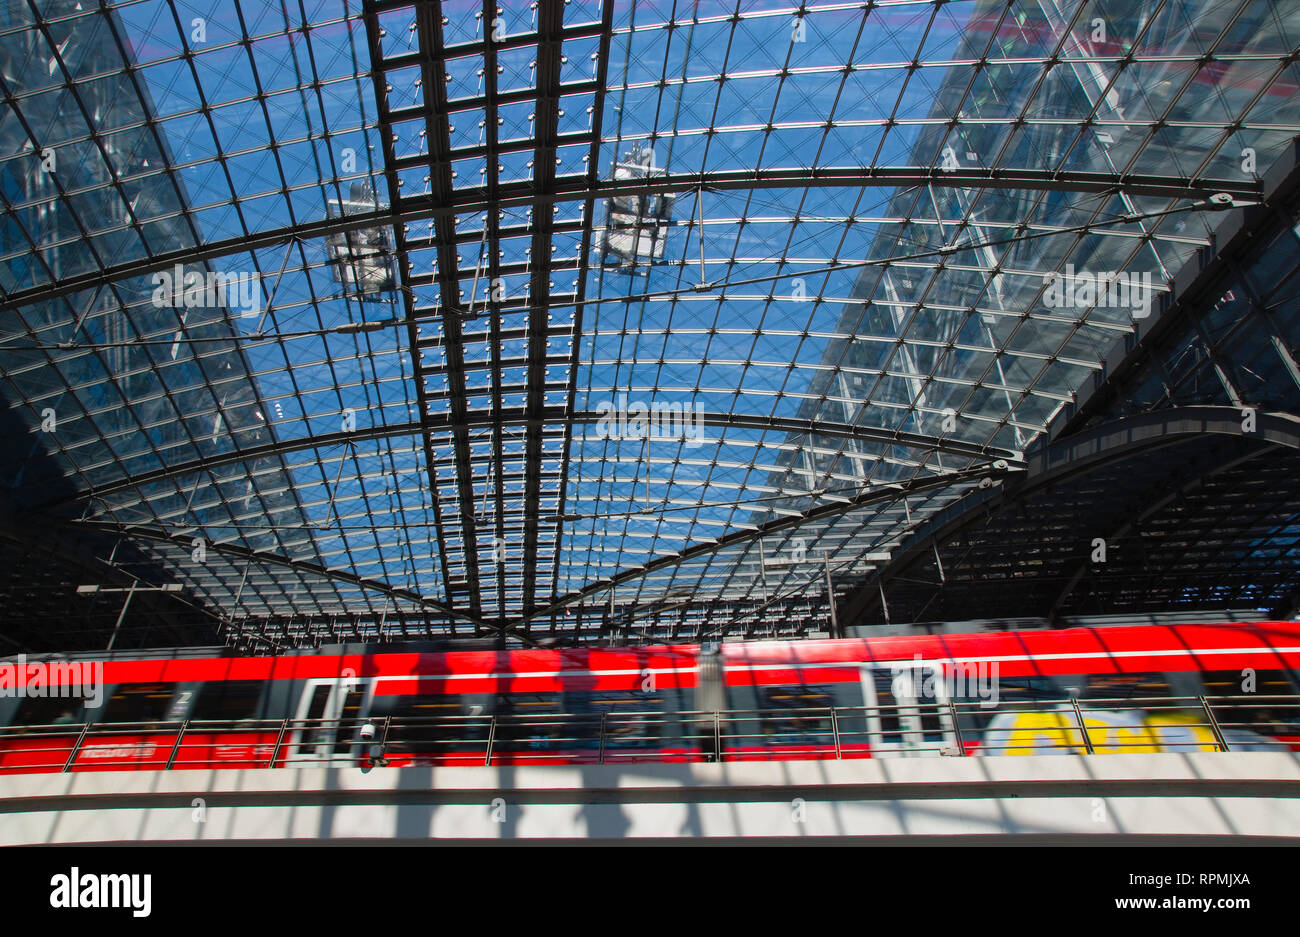 Germany, Berlin, Mitte, Hauptbahnhof interior of the steel and glass train station designed by Meinhard von Gerkan. Stock Photo